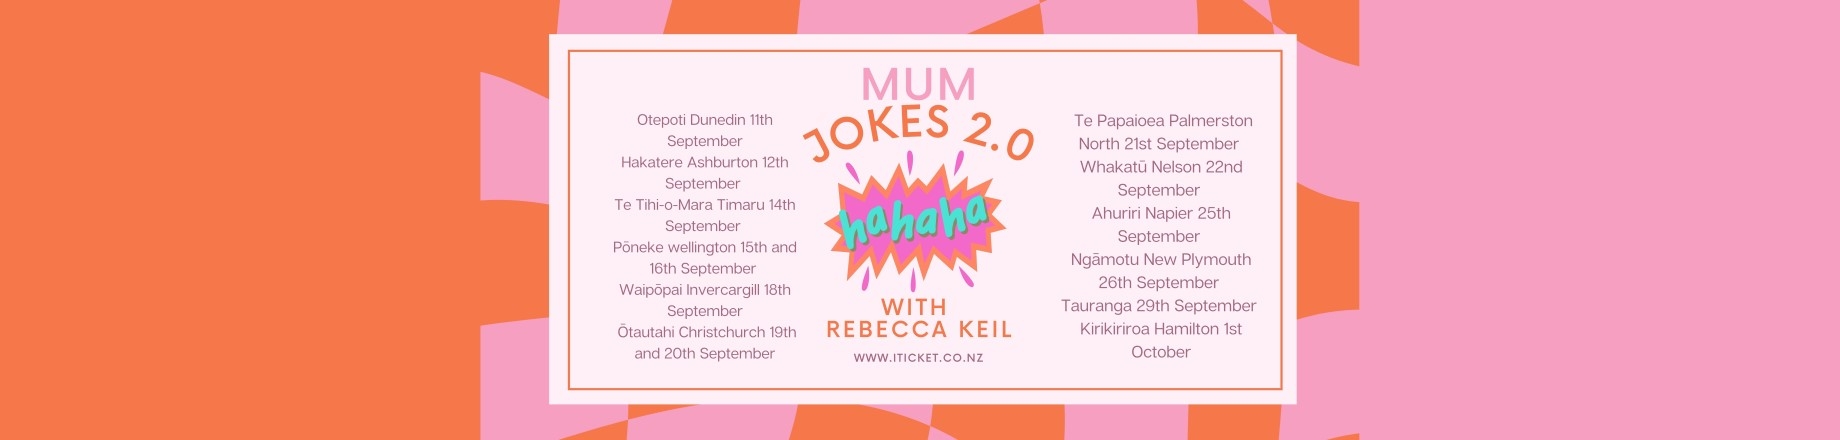 Mum Jokes 2.0 with Rebecca Keil